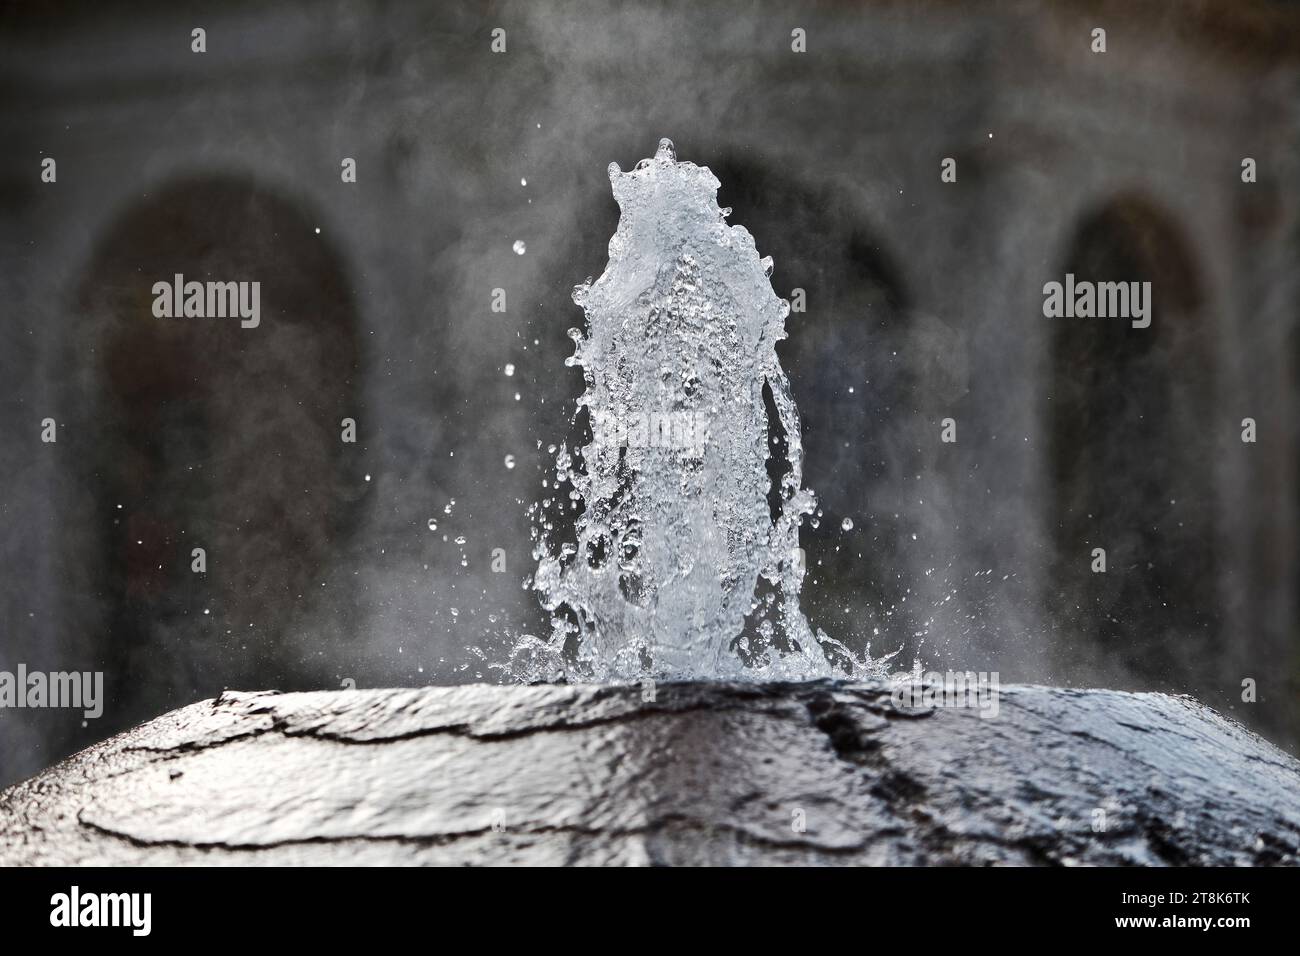 Kochbrunnen, boil fountain, a sodium chloride hot spring, Germany, Hesse, Wiesbaden Stock Photo